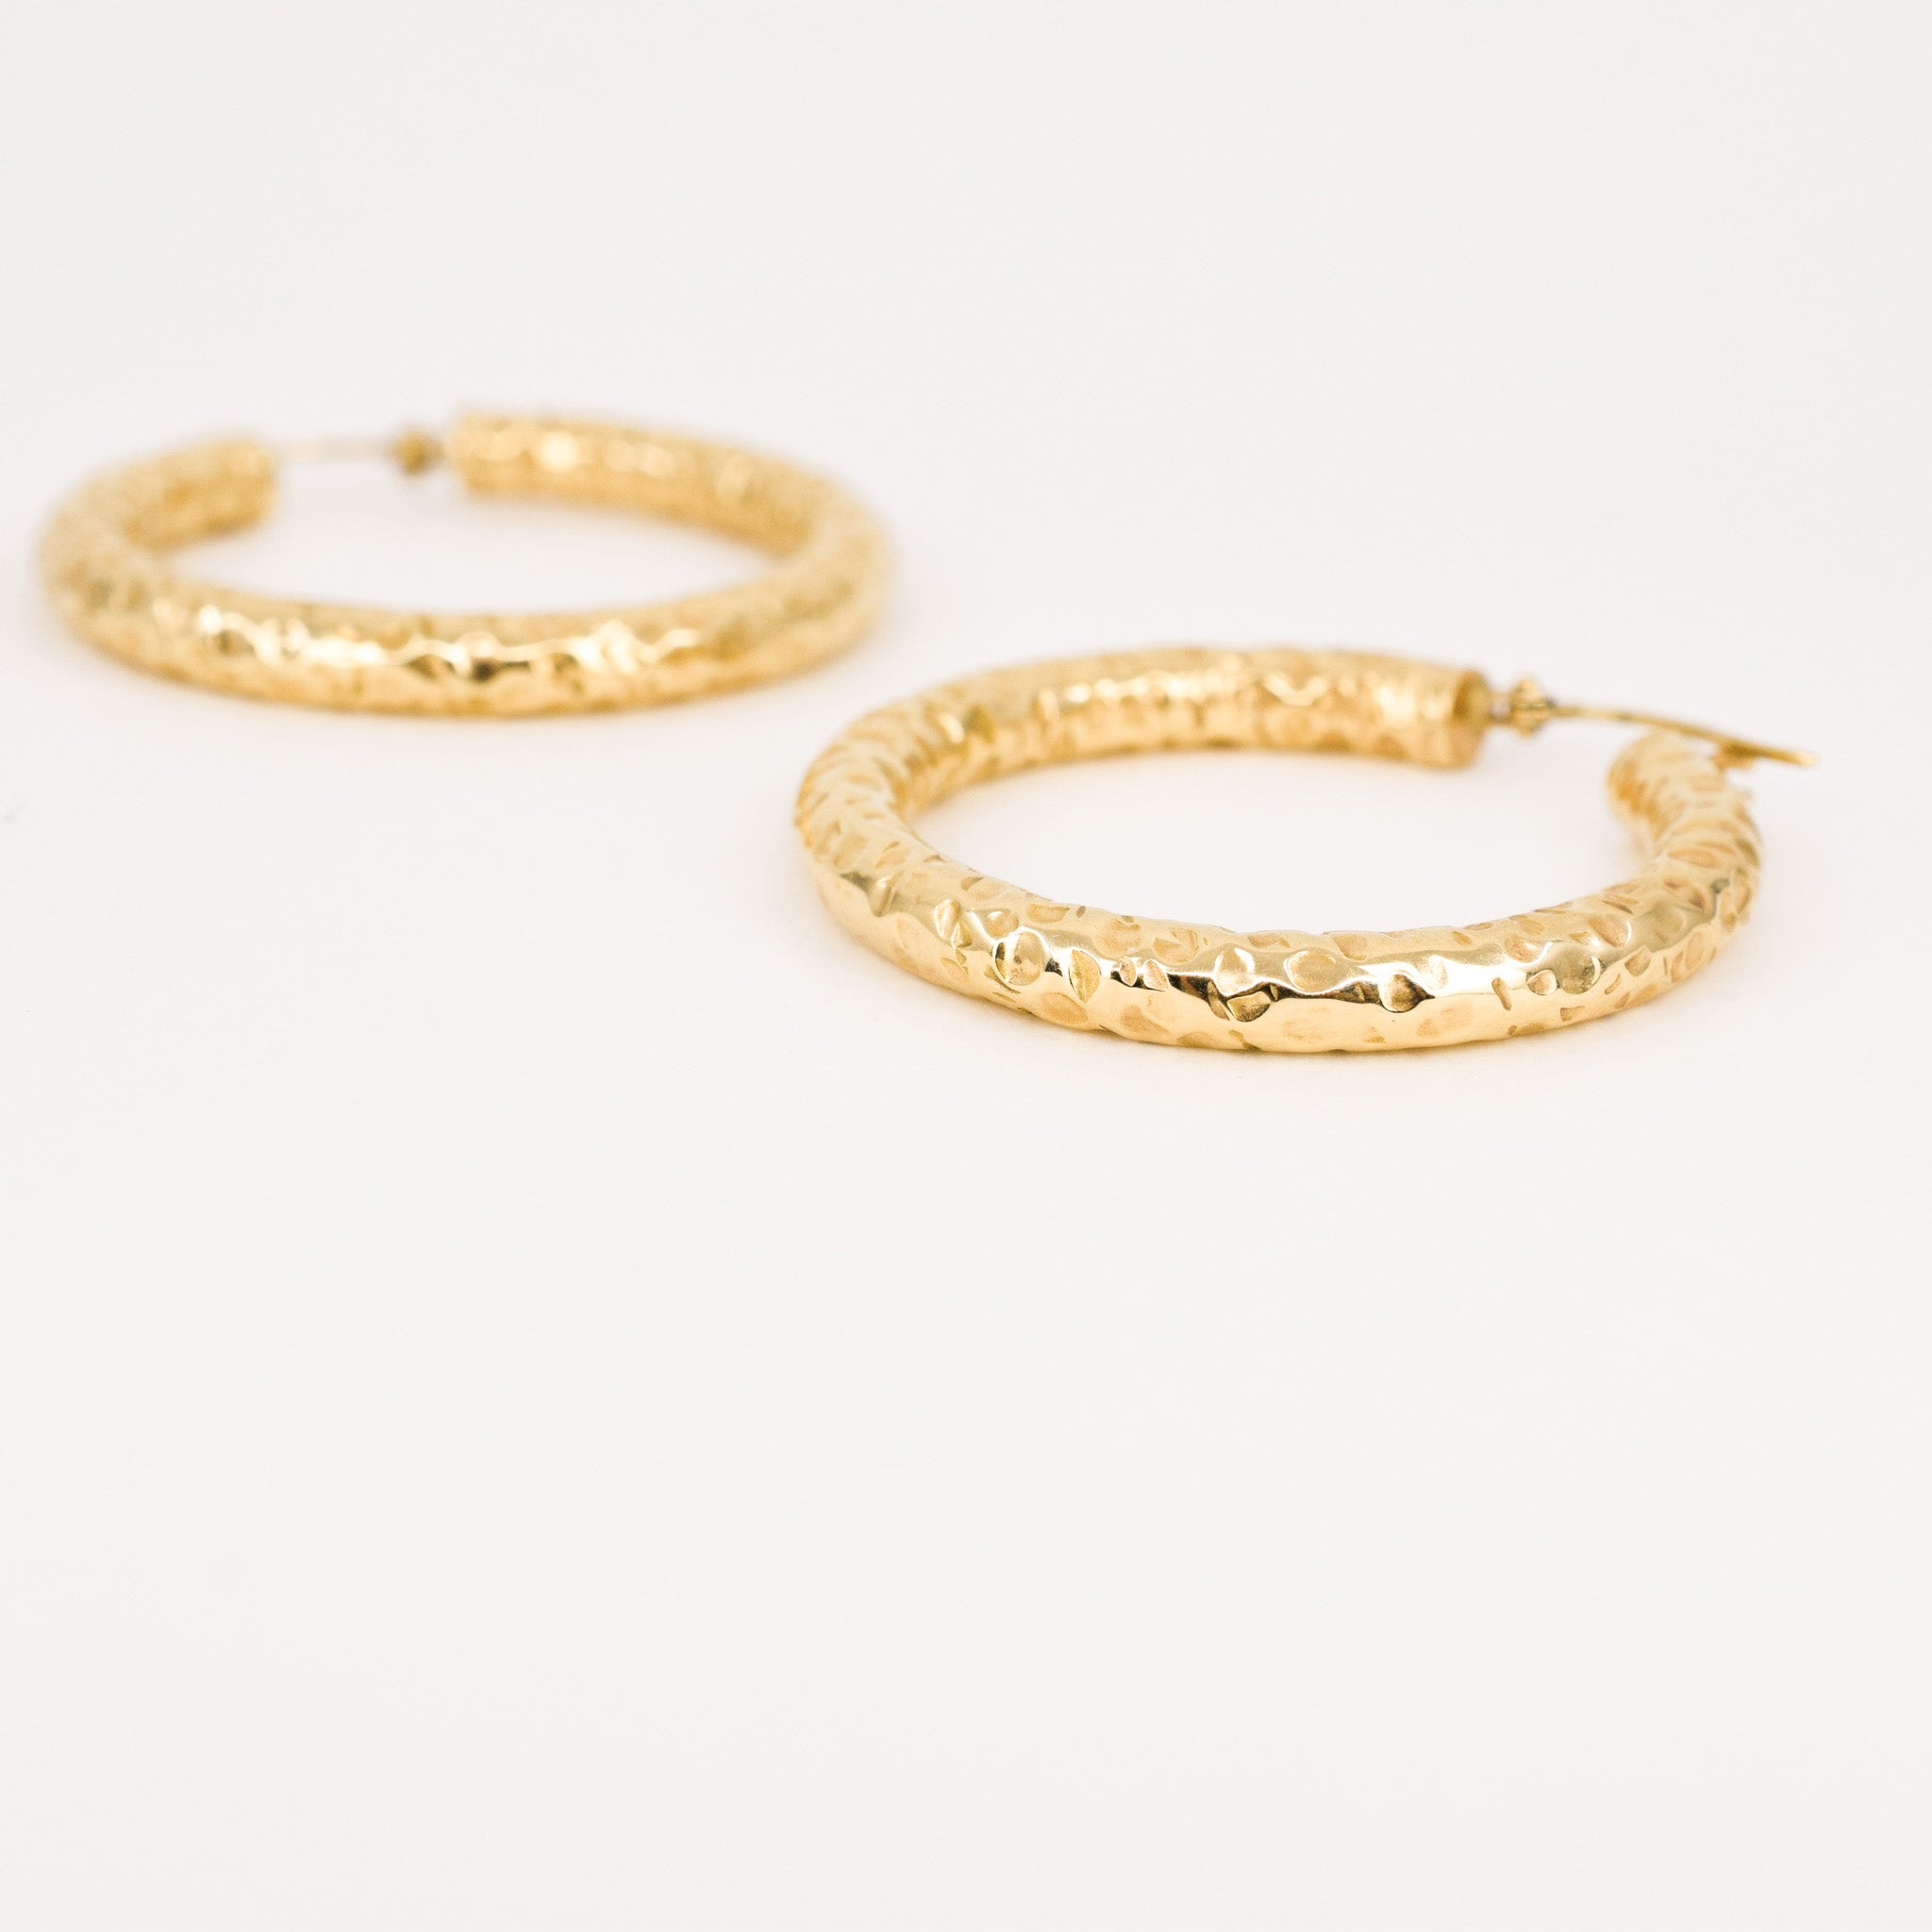 14k gold vintage hammered hoop earrings, folklor vintage jewelry canada